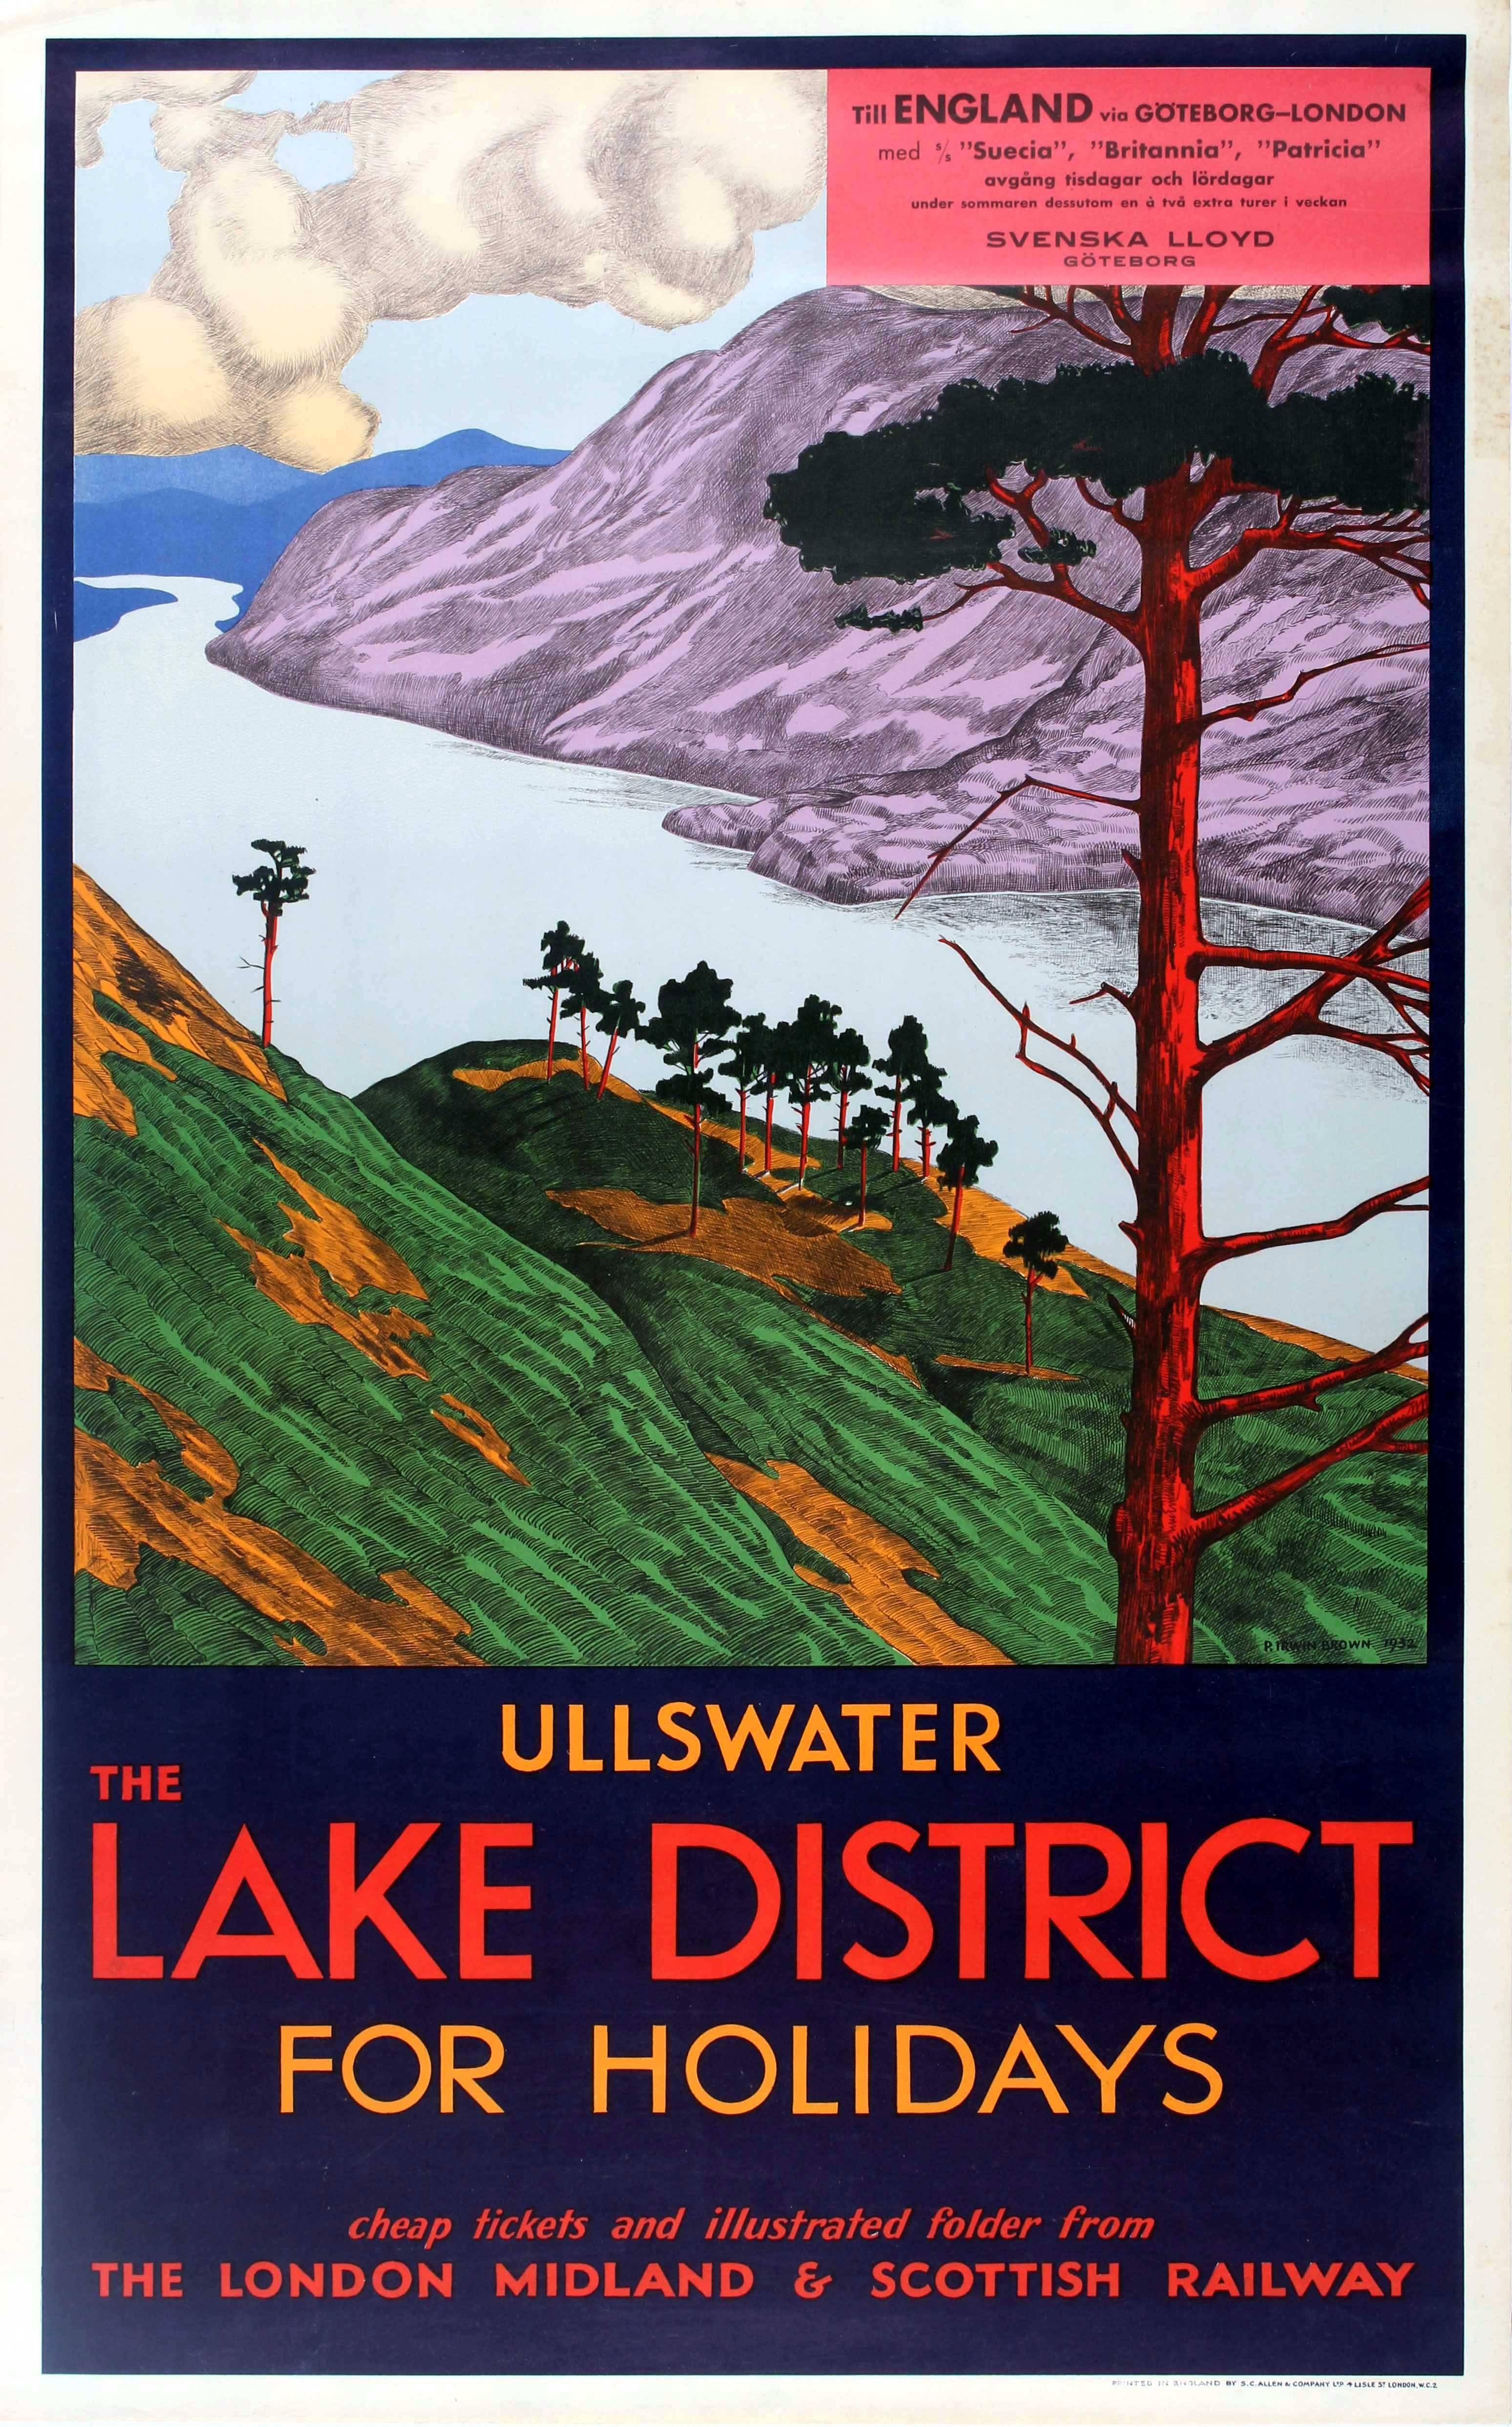 Pieter Irwin Brown Print - Original London Midland & Scottish Railway LMS Poster - Ullswater Lake District